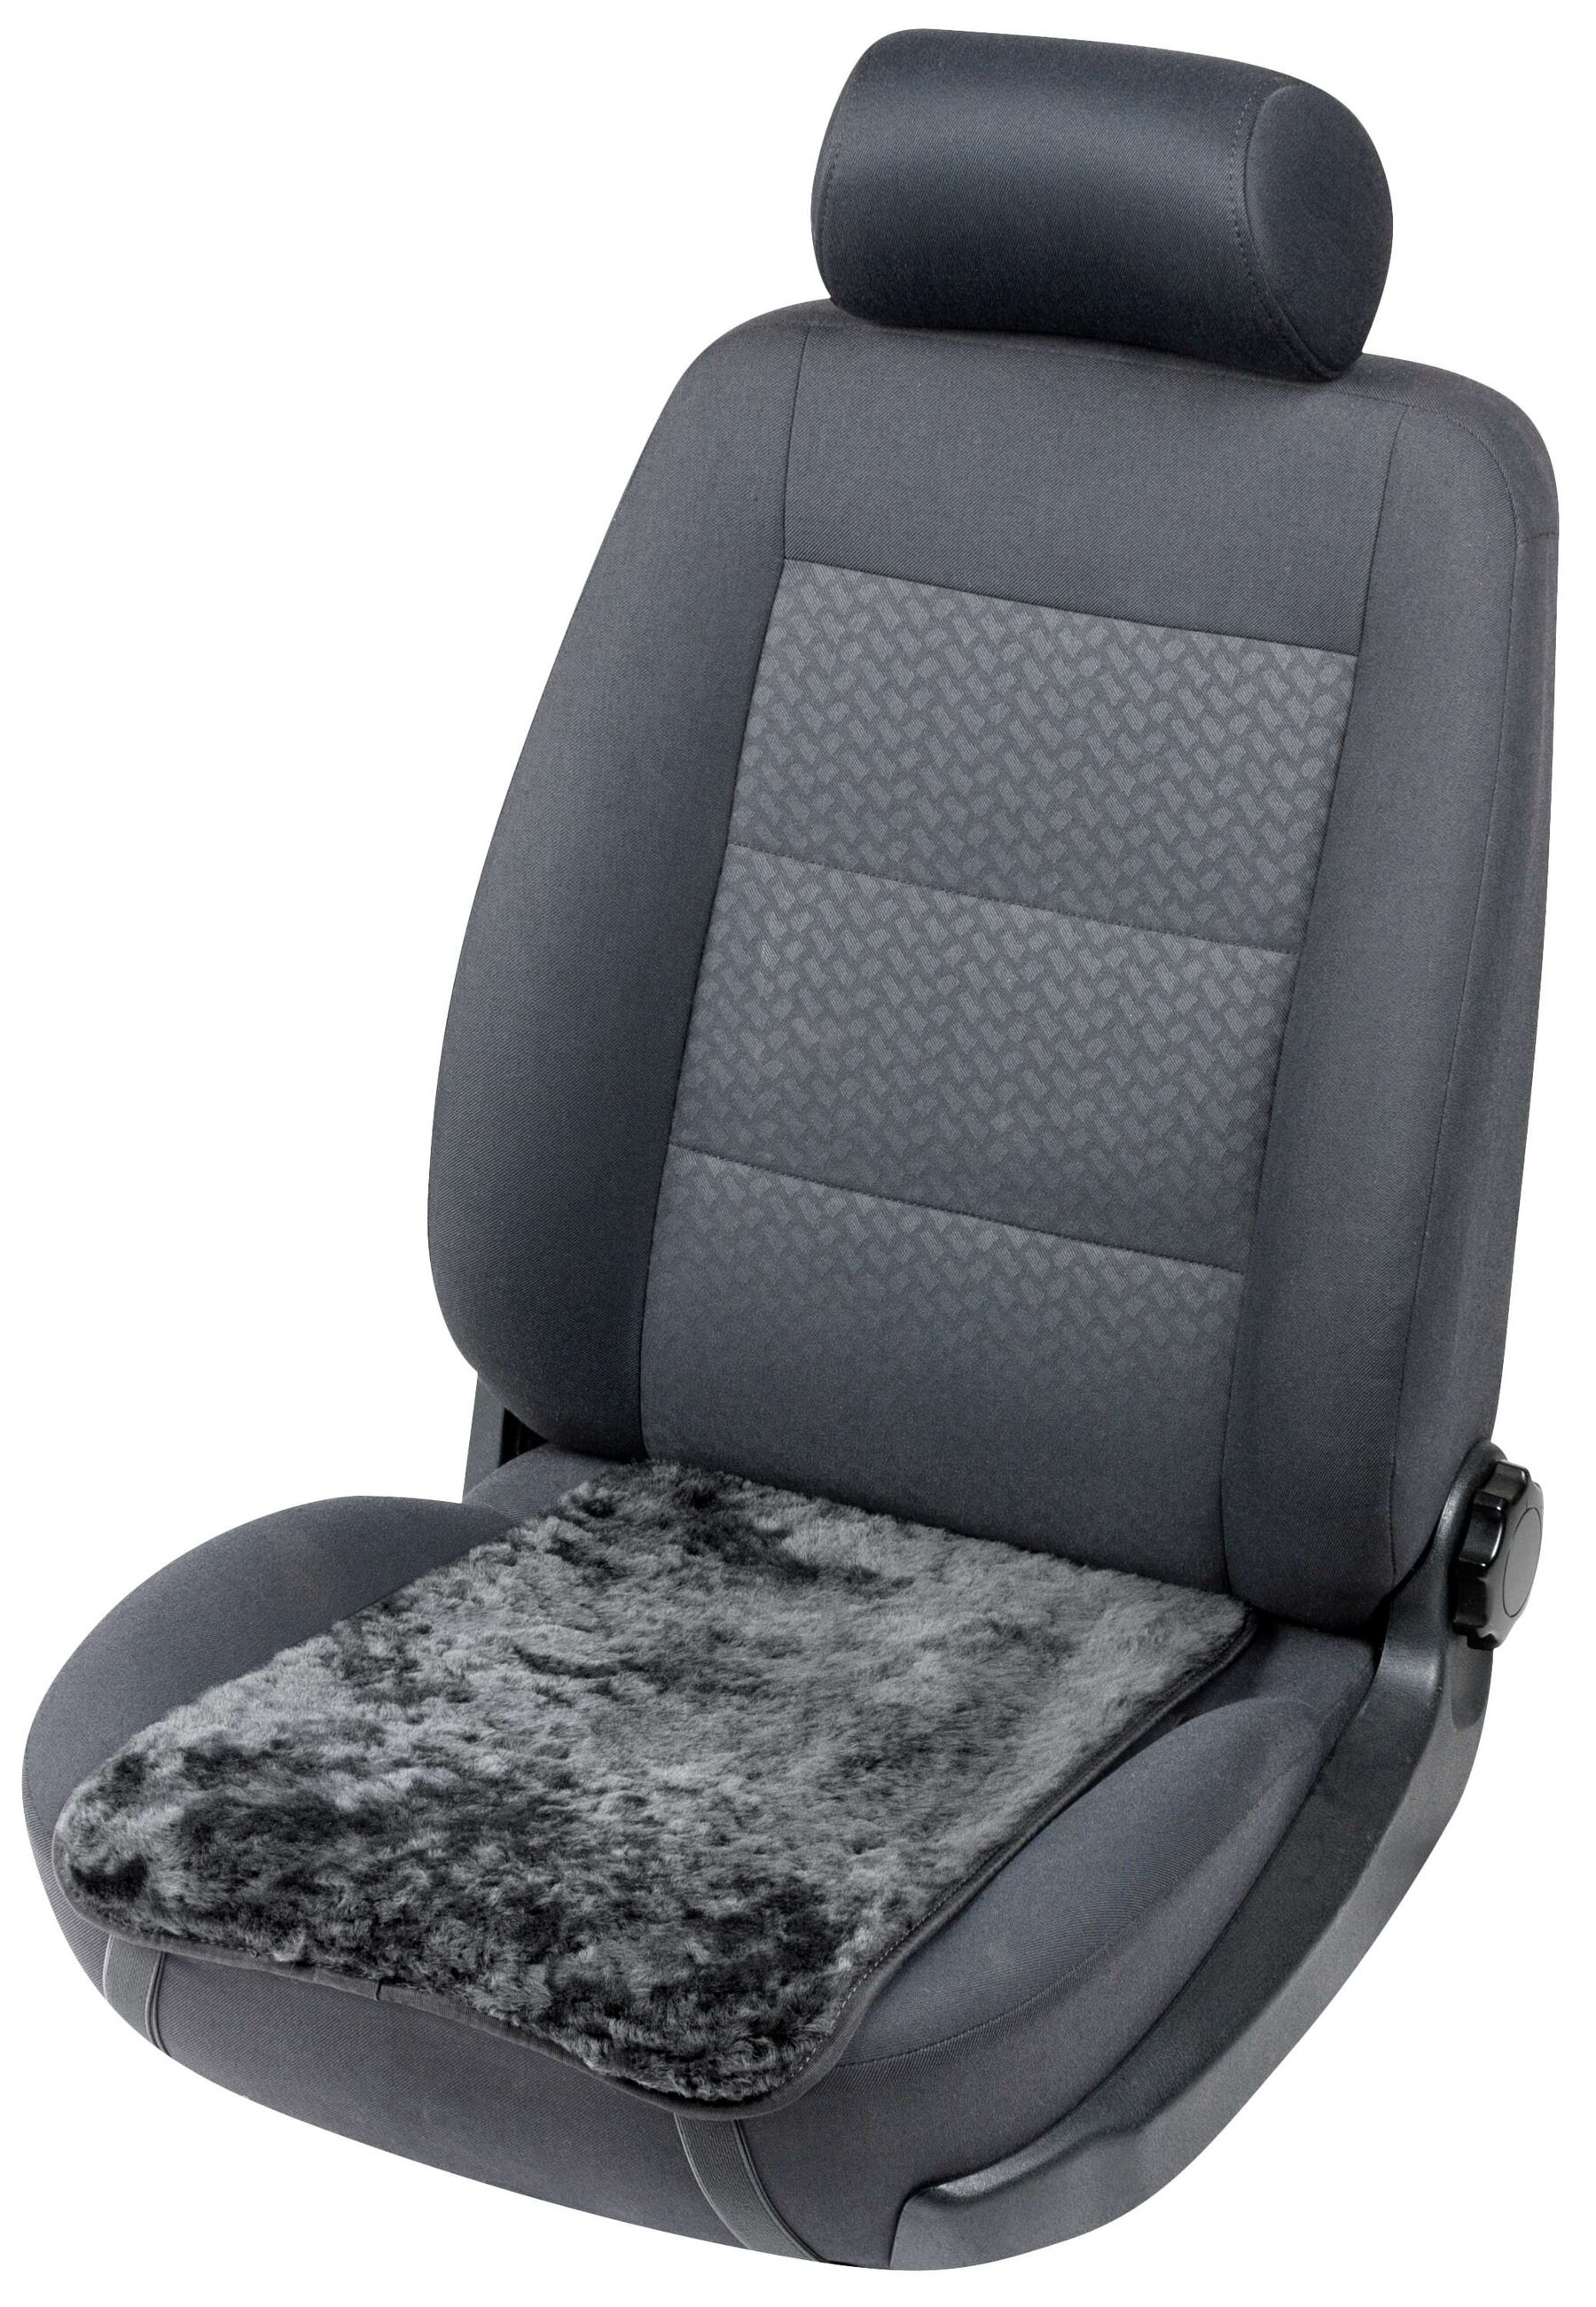 car seat lambskin overlay molly beige 12-14 mm height of skin